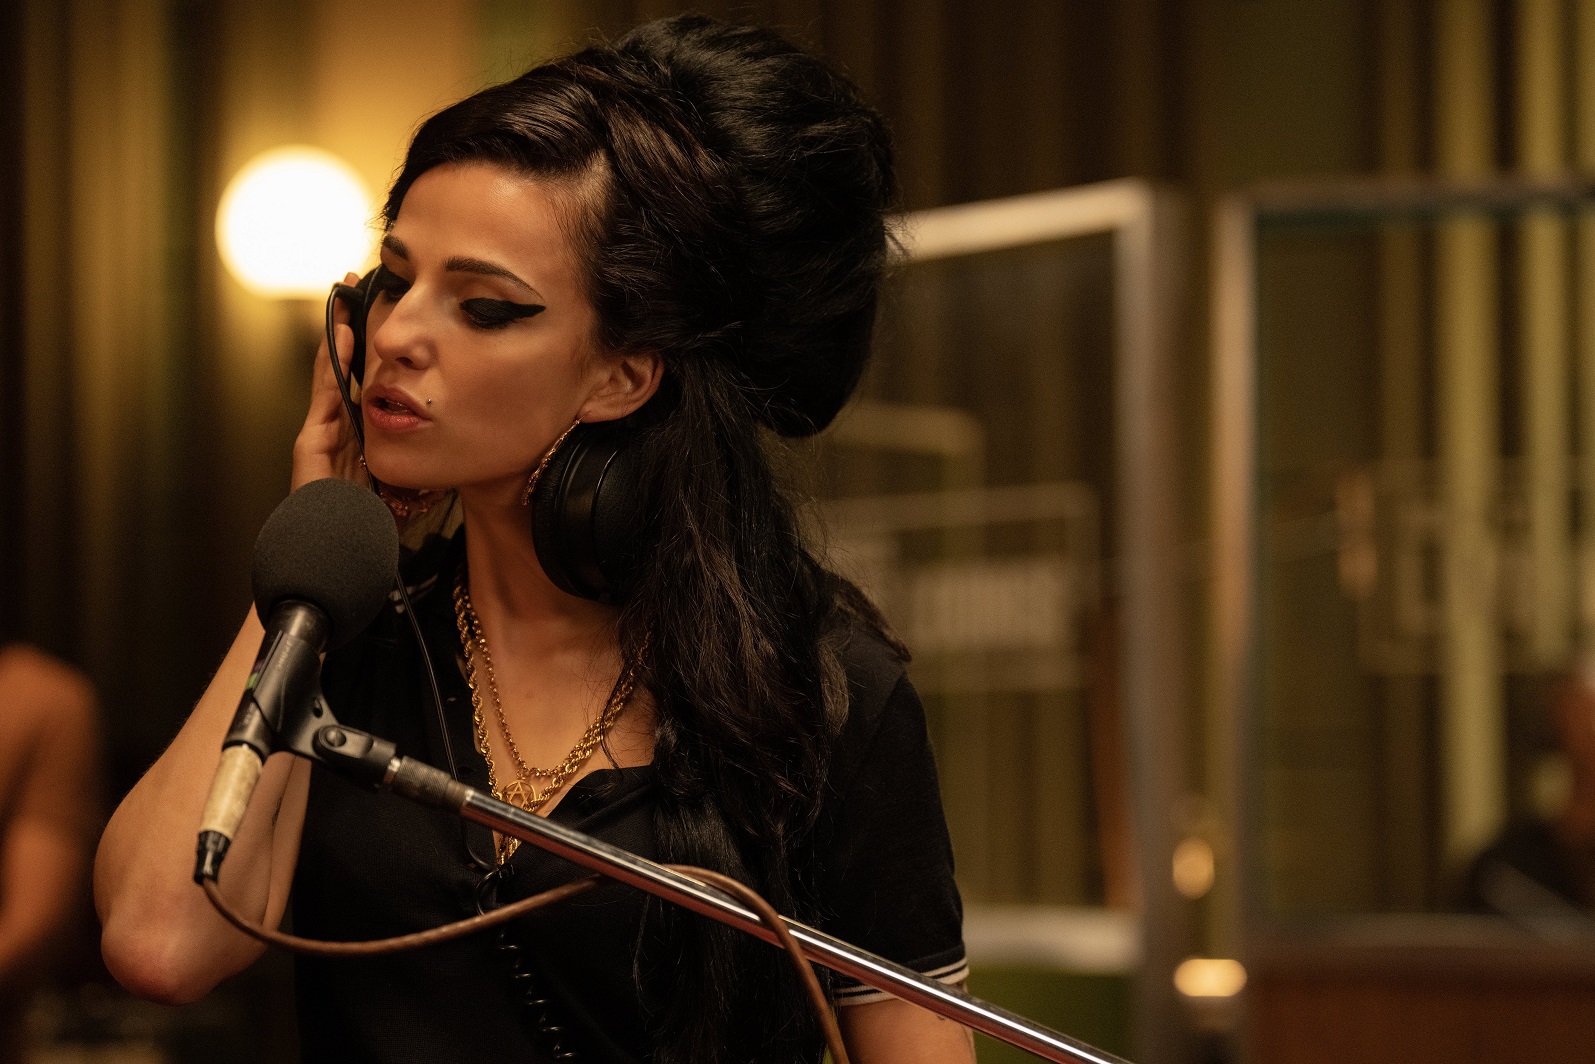 Marisa Abela plays Amy Winehouse in Back to Black.